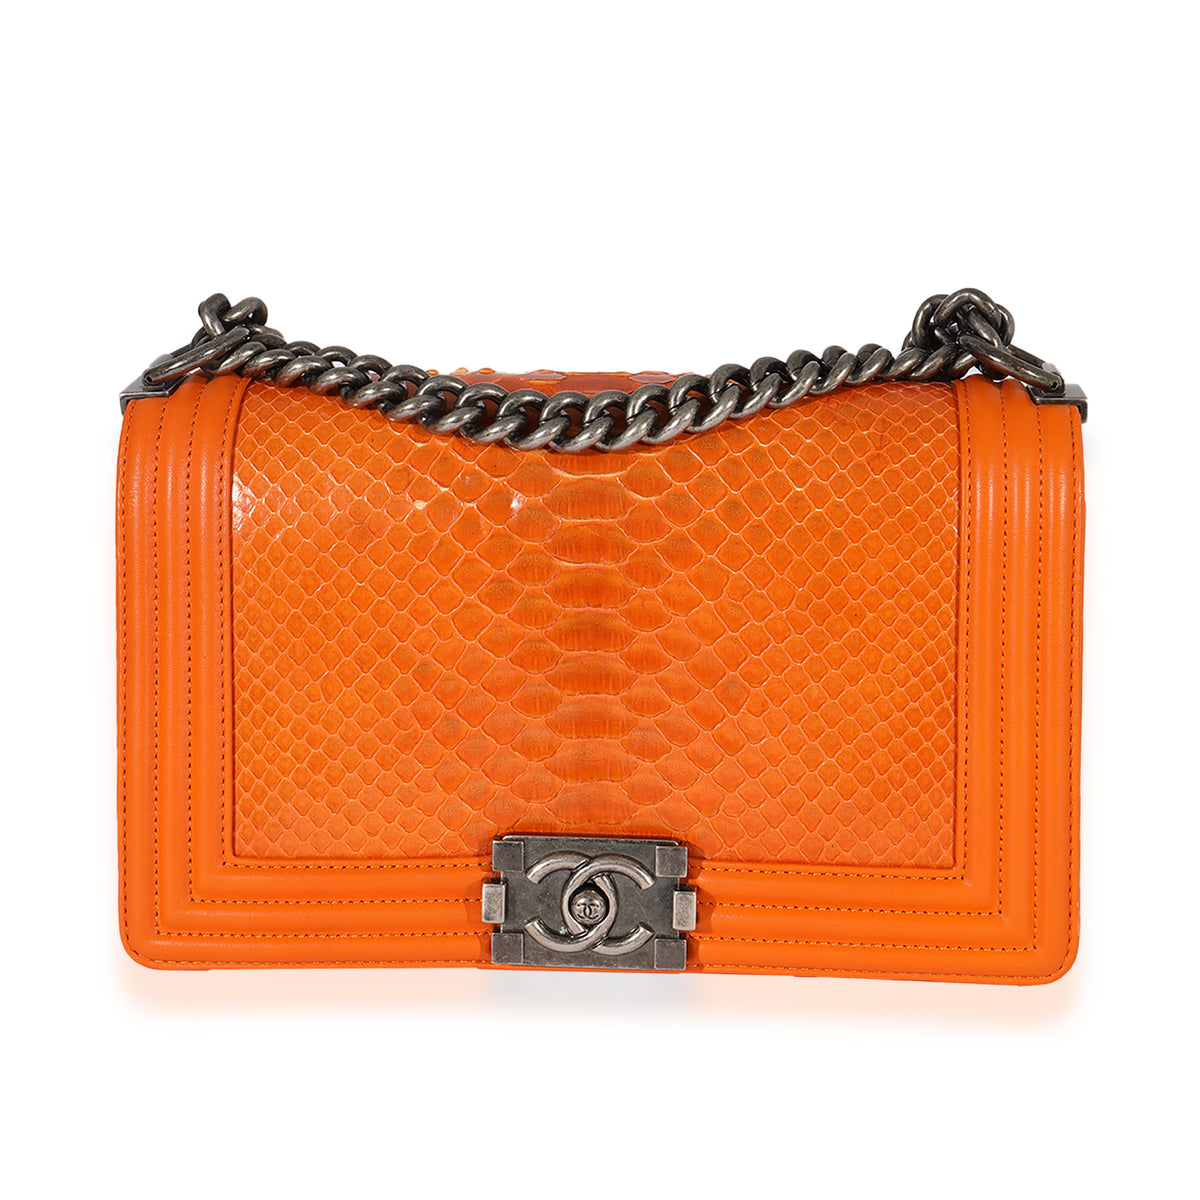 Chanel Orange Python Medium Boy Bag